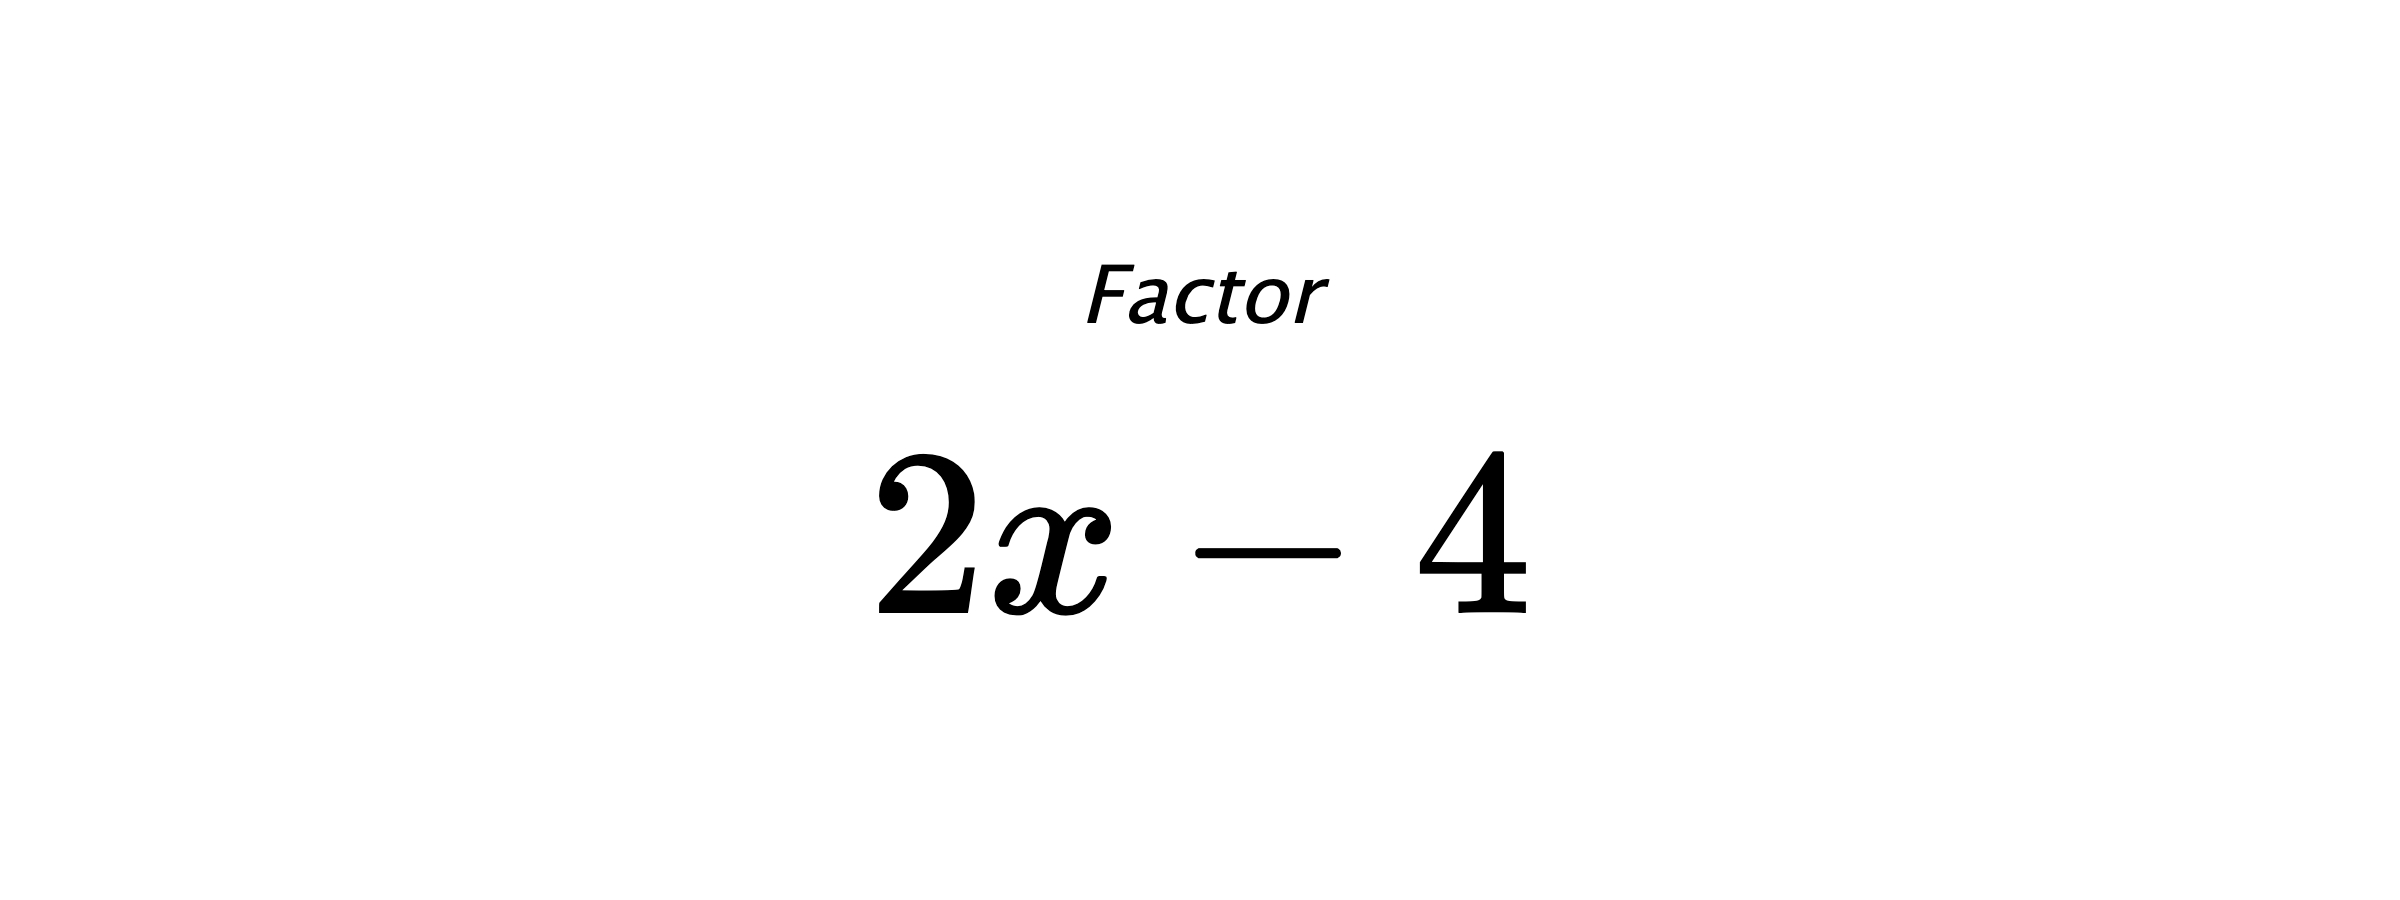 Factor $ 2 x - 4 $